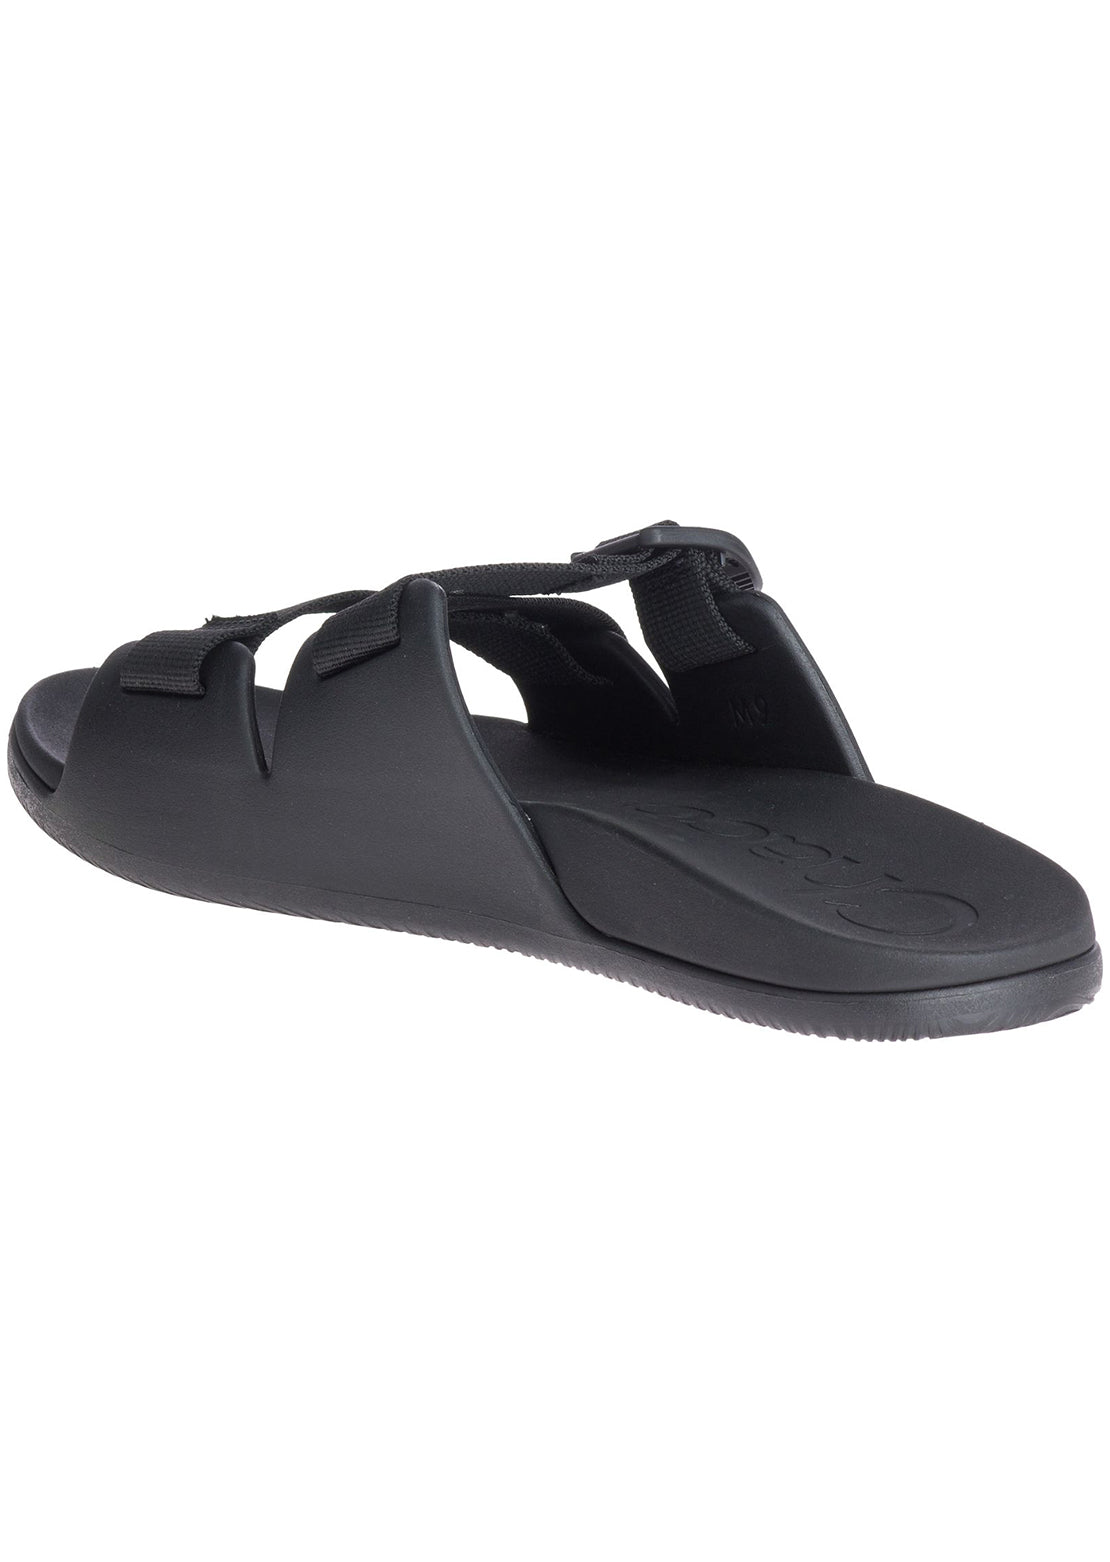 Chaco Men’s Chillos Slide Sandals Black